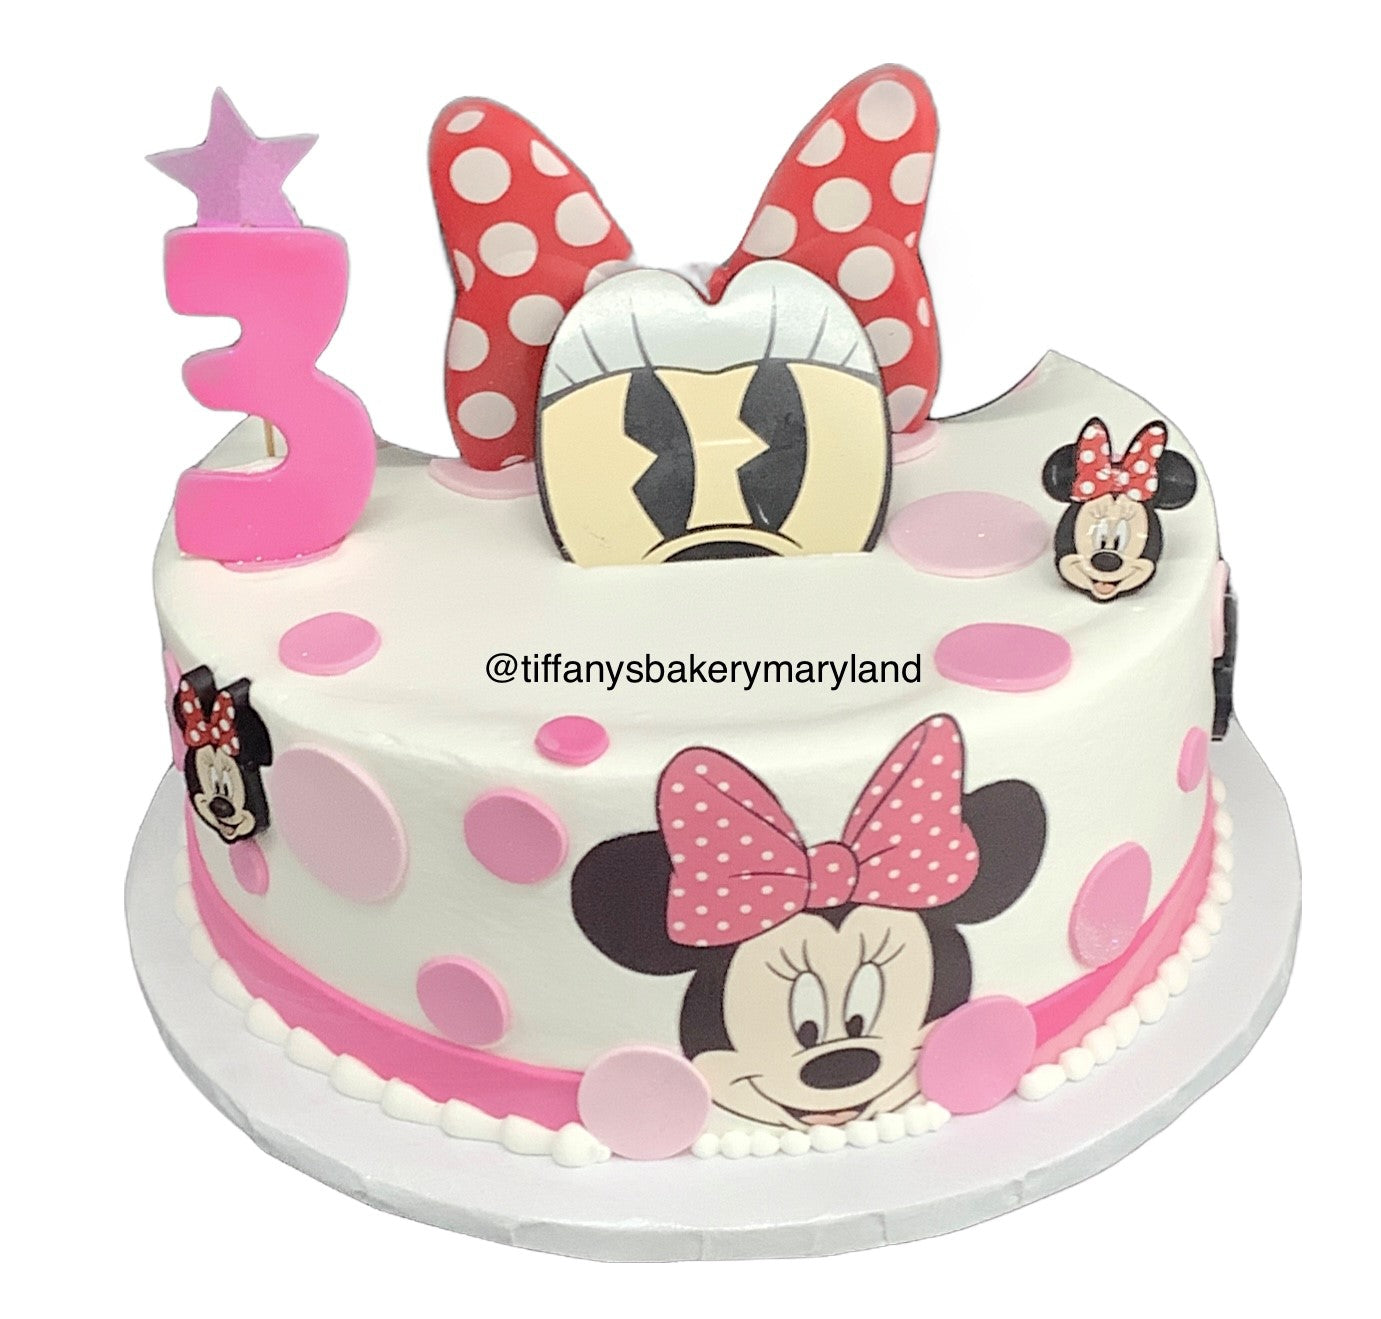 Pretty Minnie Mouse Cake - Wilton